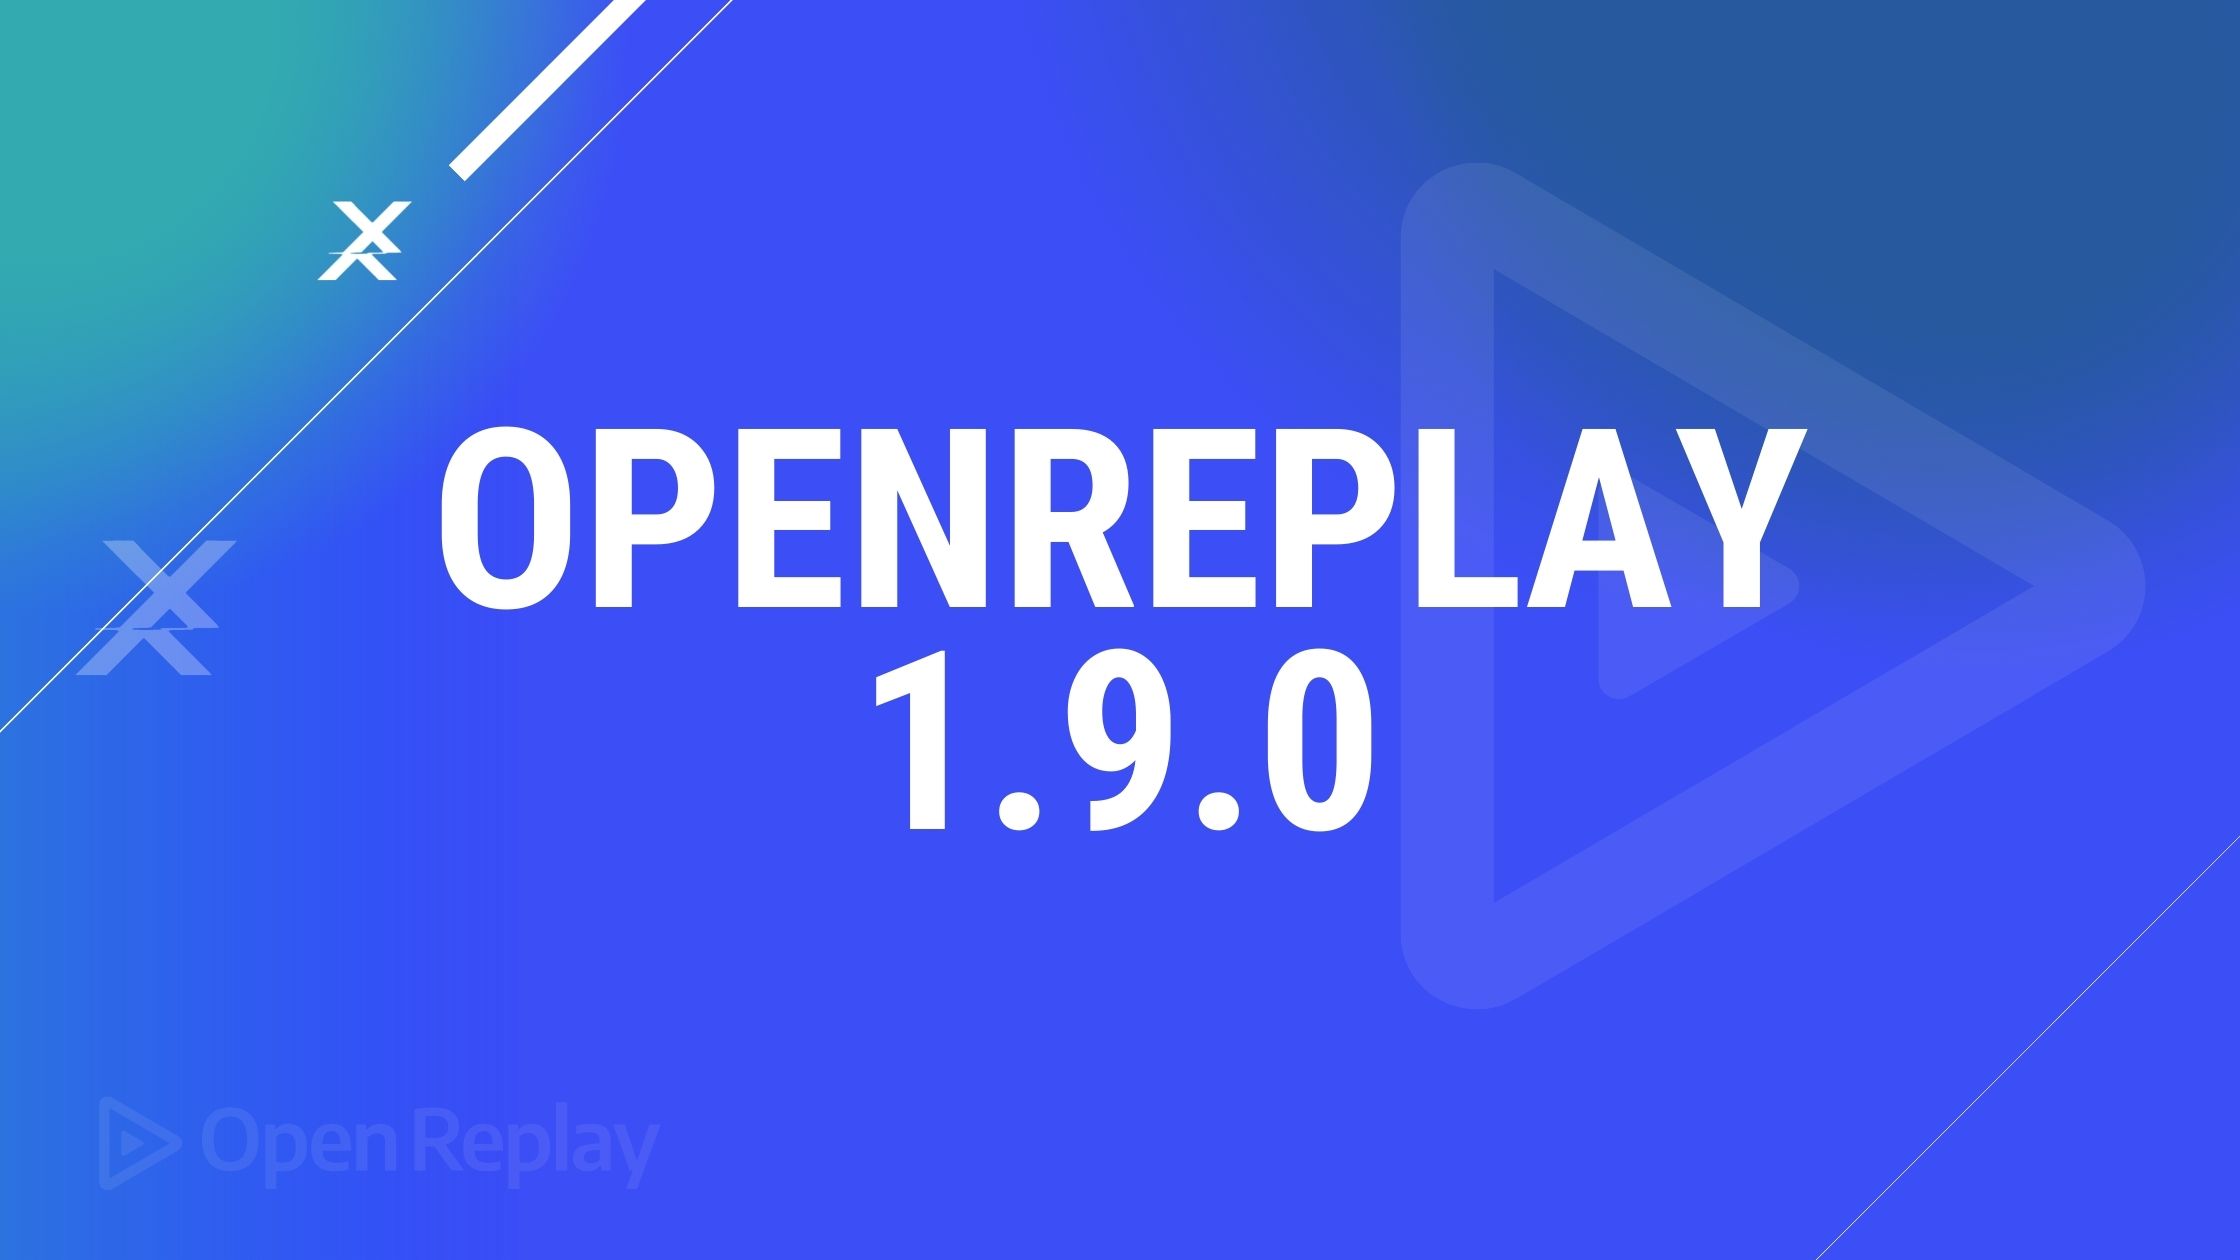 OpenReplay November release (1.9.0)